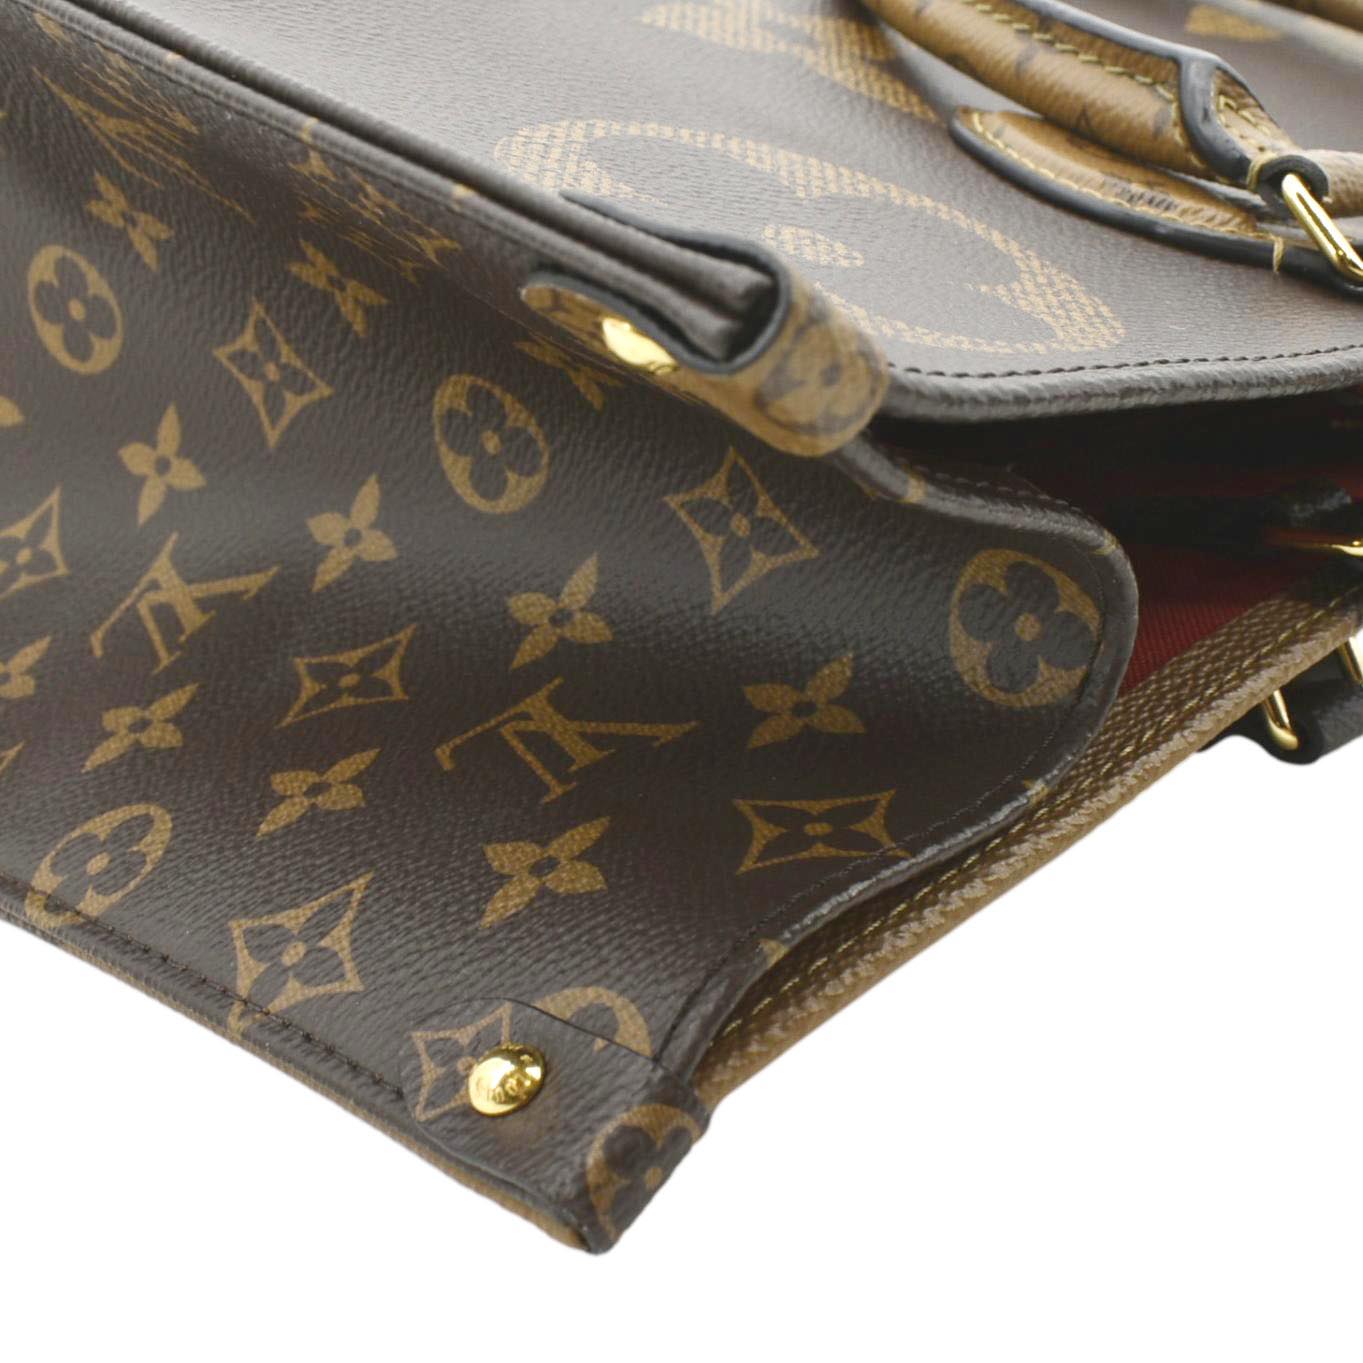 Louis Vuitton - OnTheGo GM Monogram - Top Handle Tote w/ Shoulder